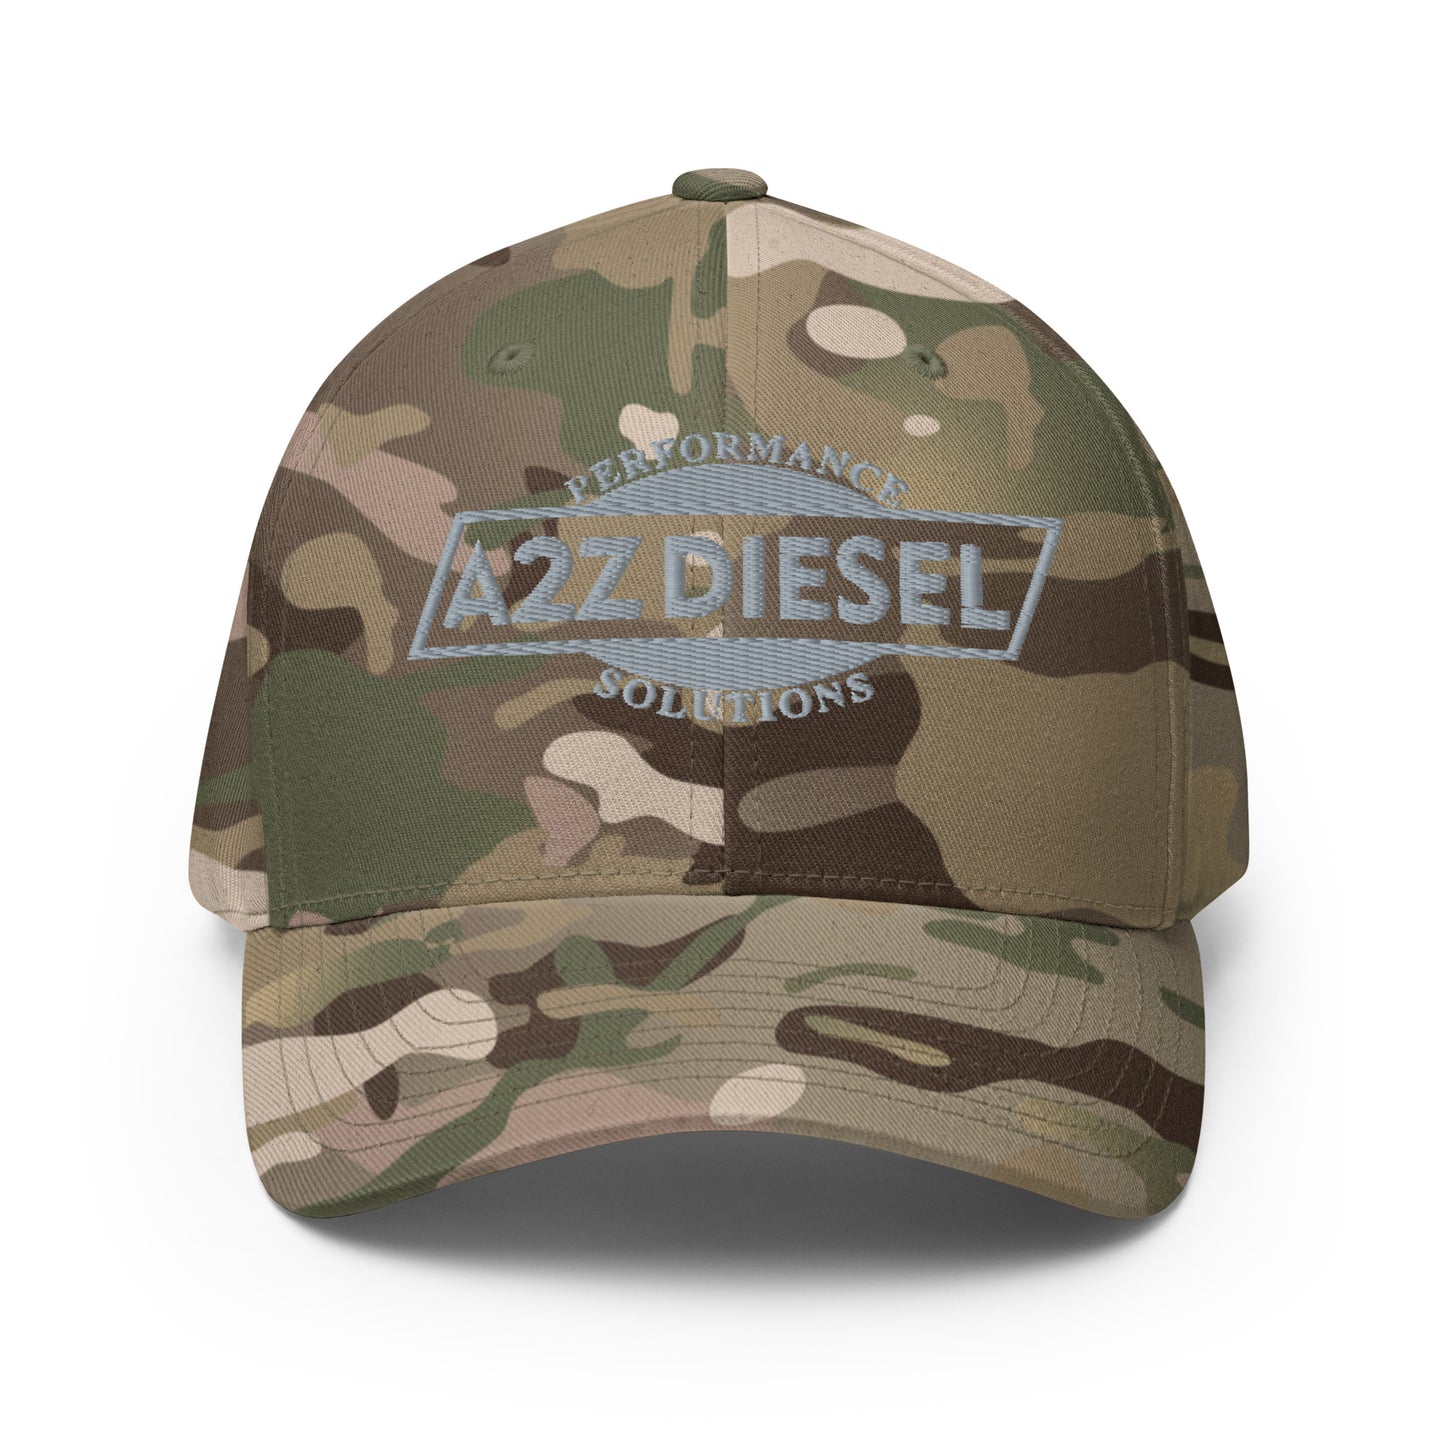 A2Z Diesel FlexFit Baseball Cap